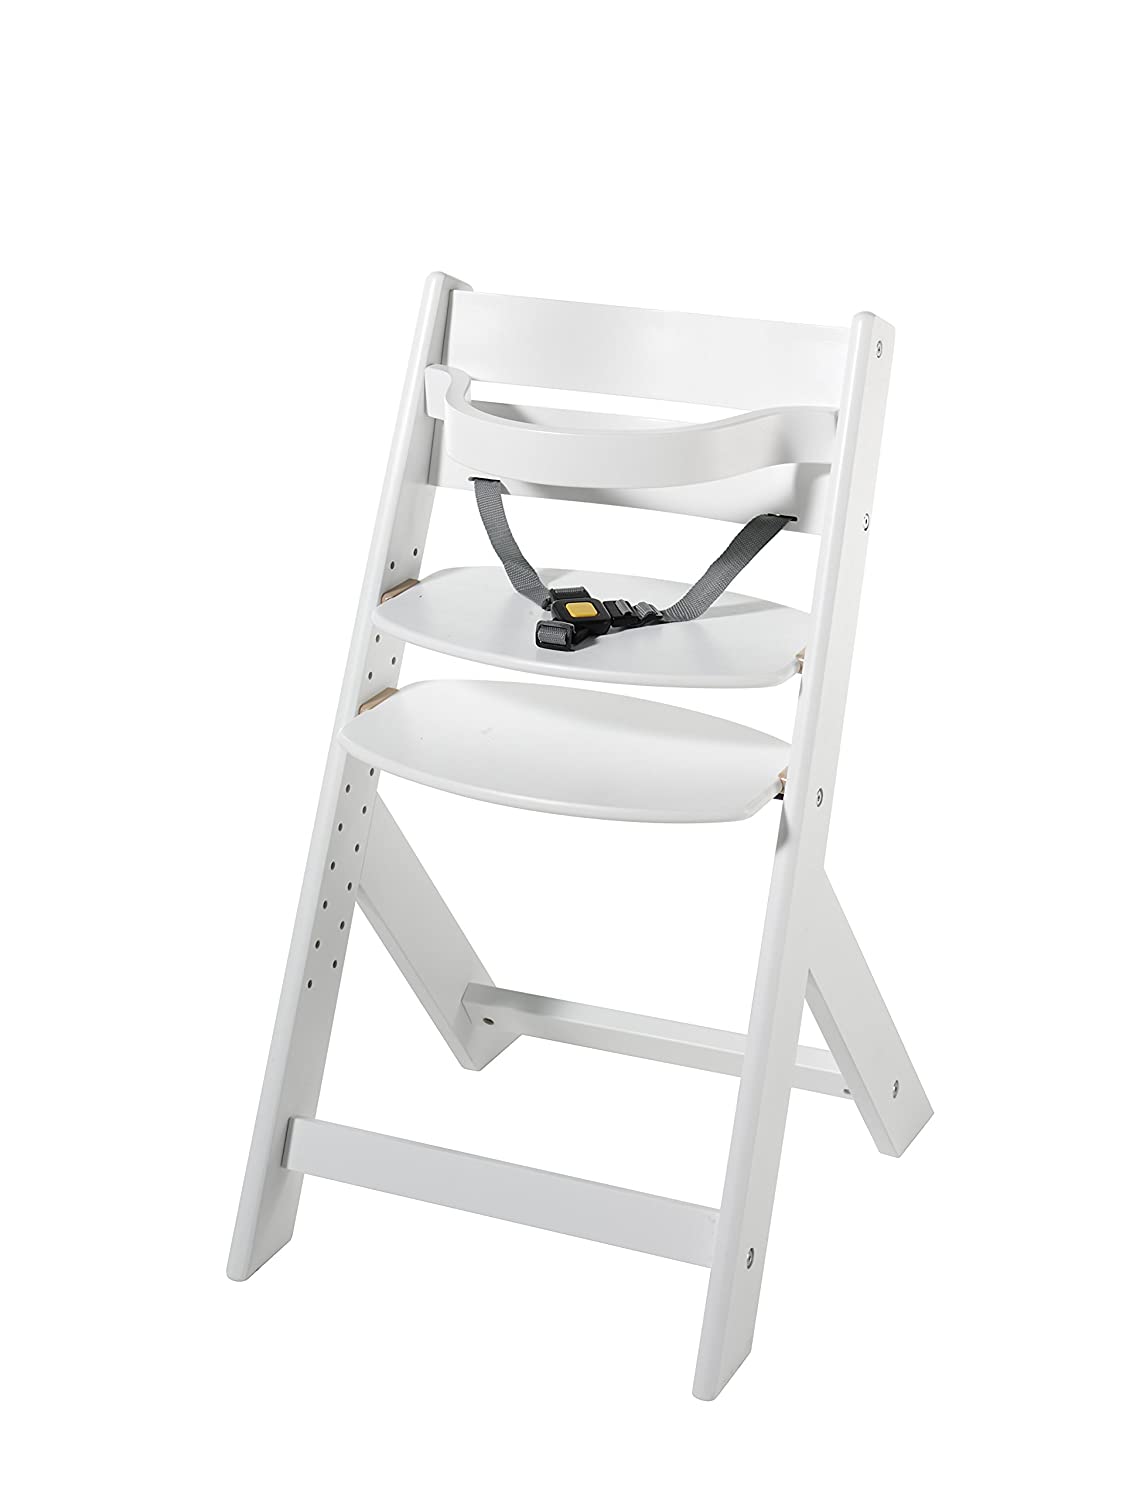 Schardt Domino III 01 125 00 02 High Chair White